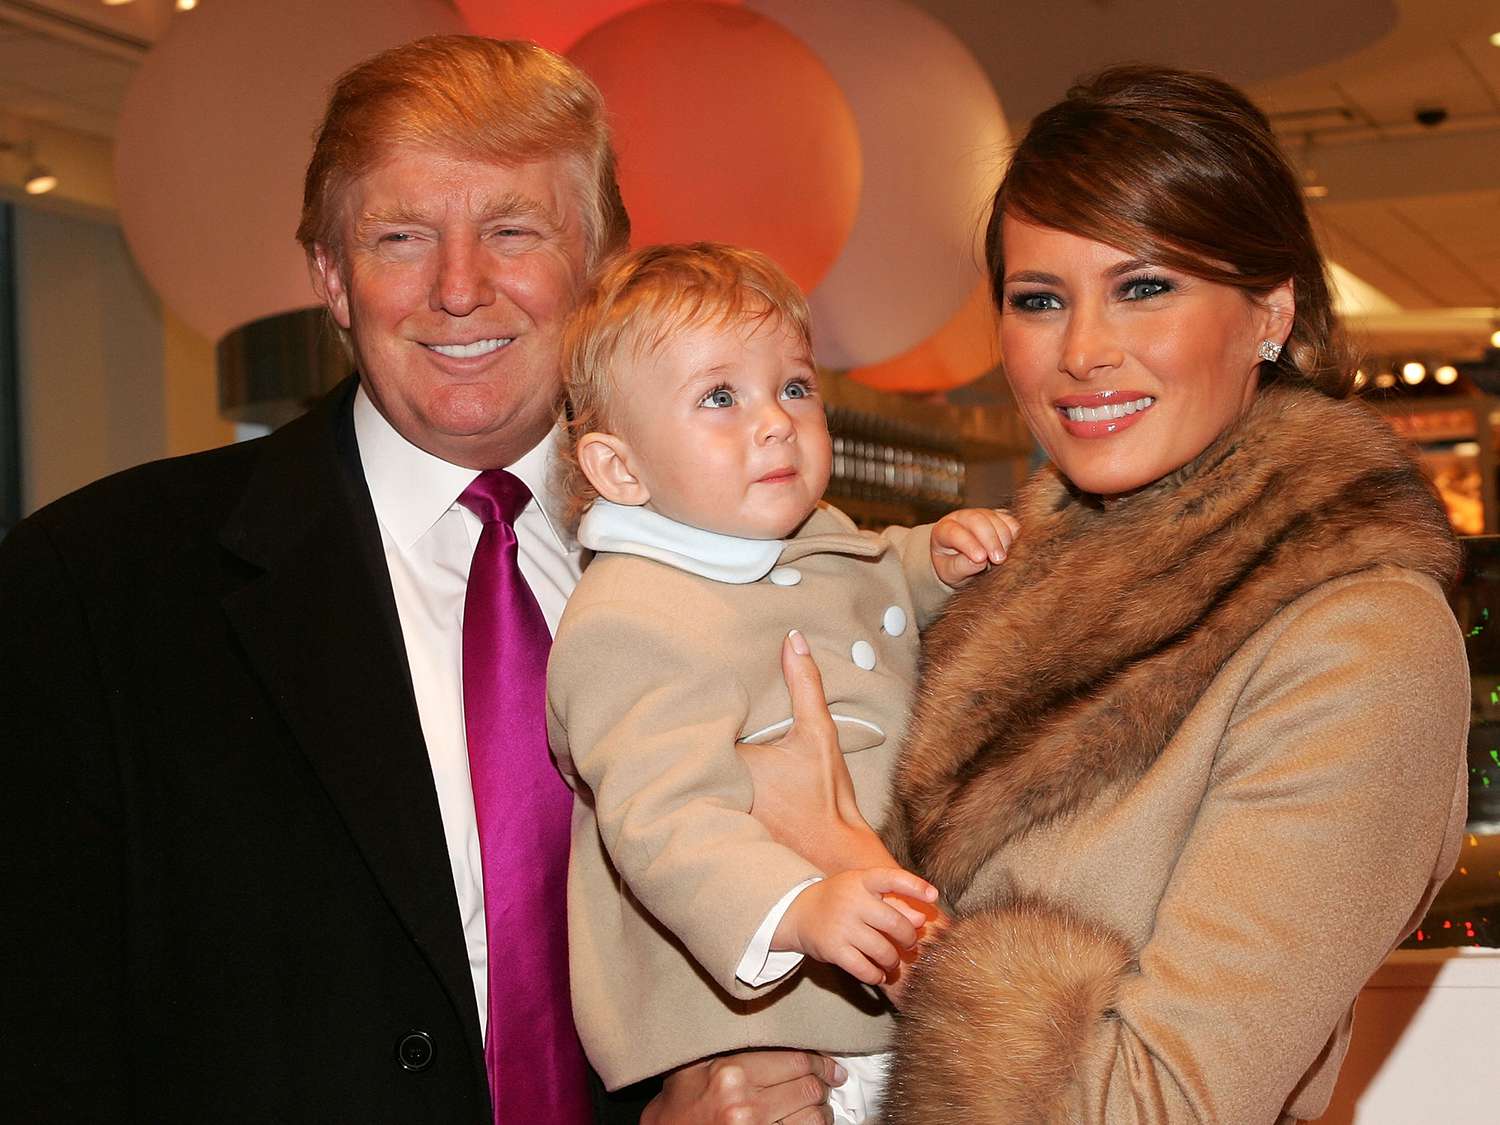 Donald Trump, his wife Melania Trump and their son Barron